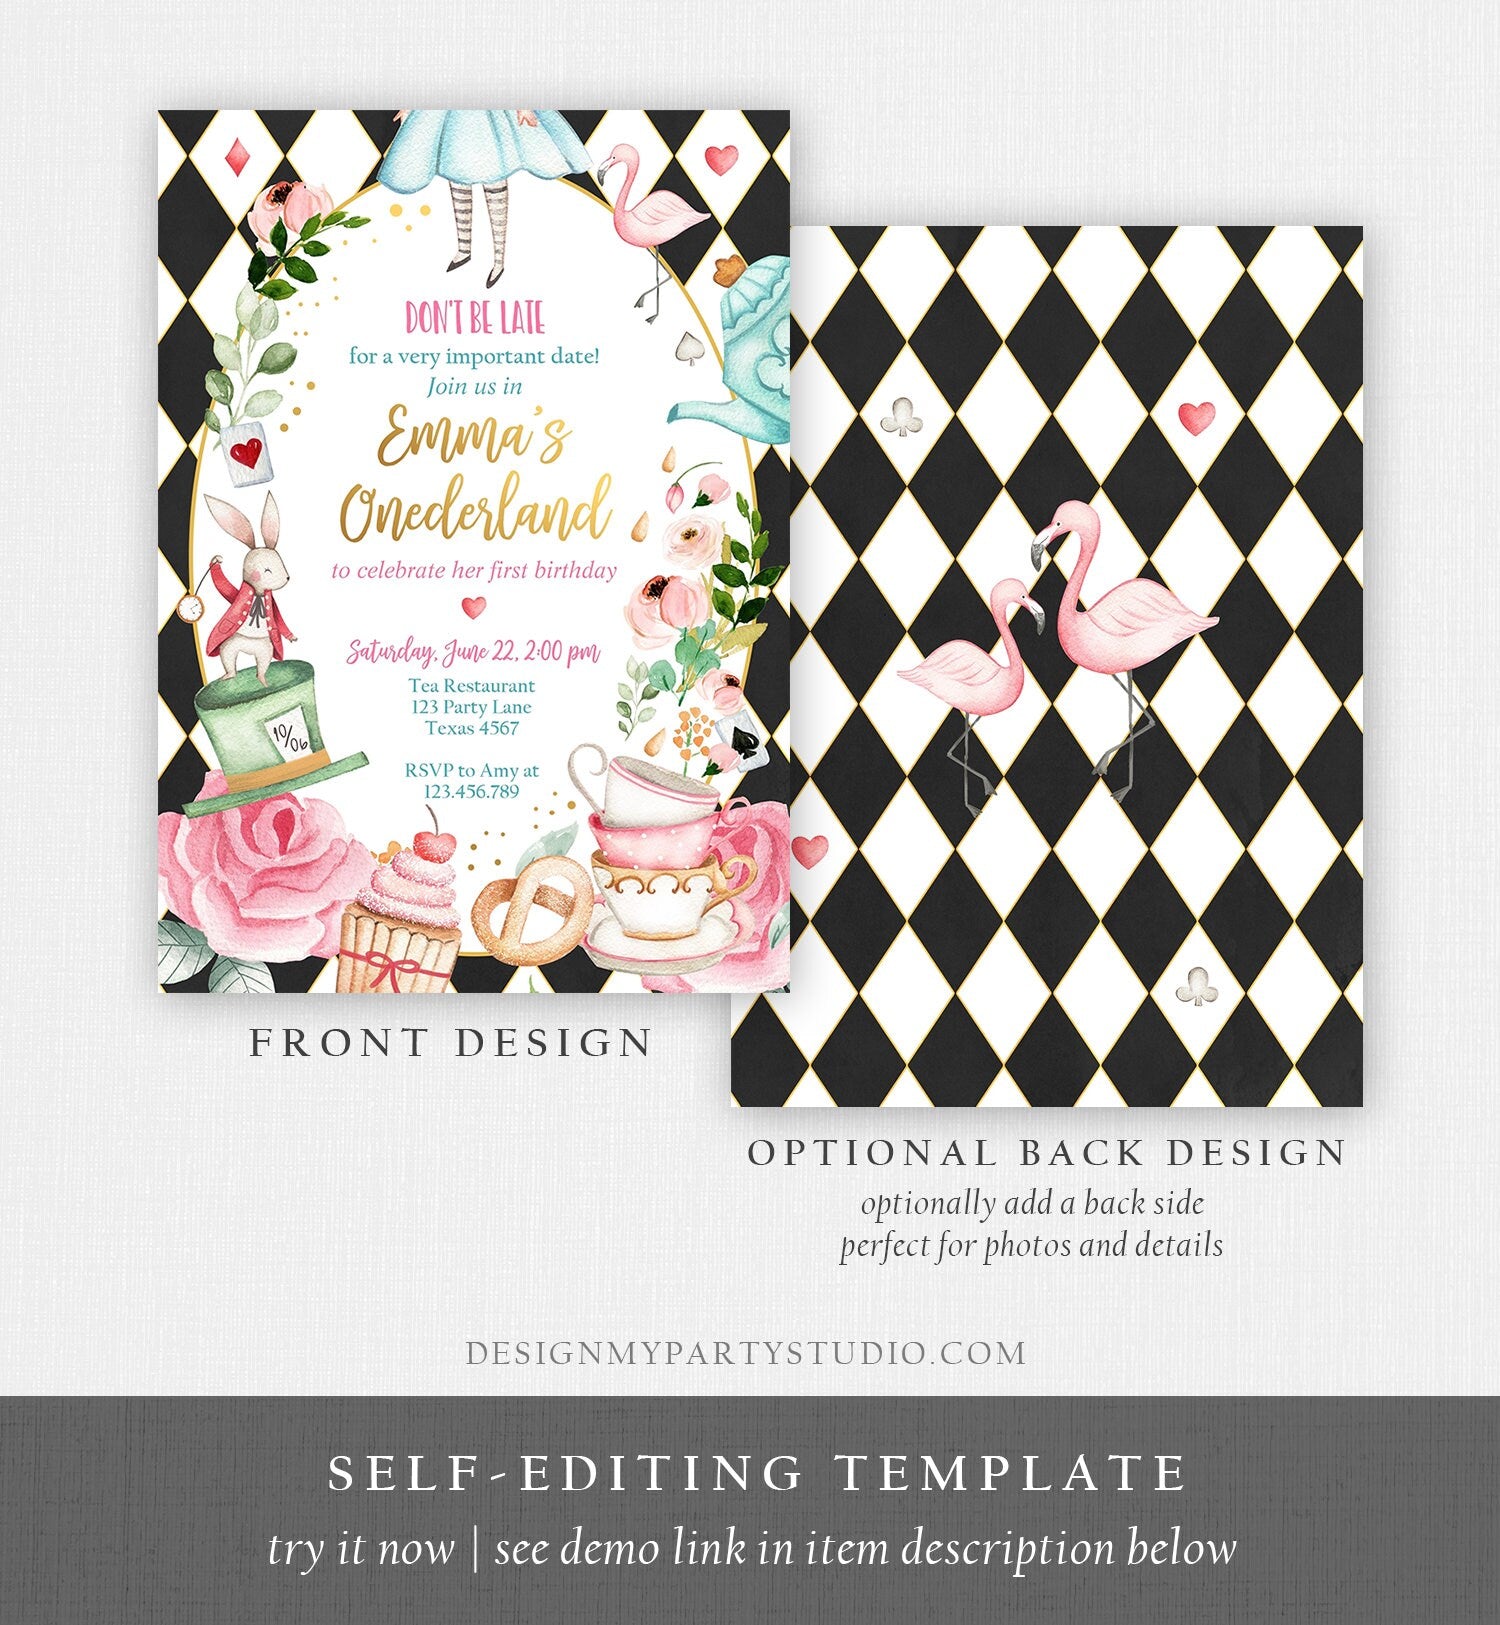 Alice in Wonderland birthday invitation editable template - Edit